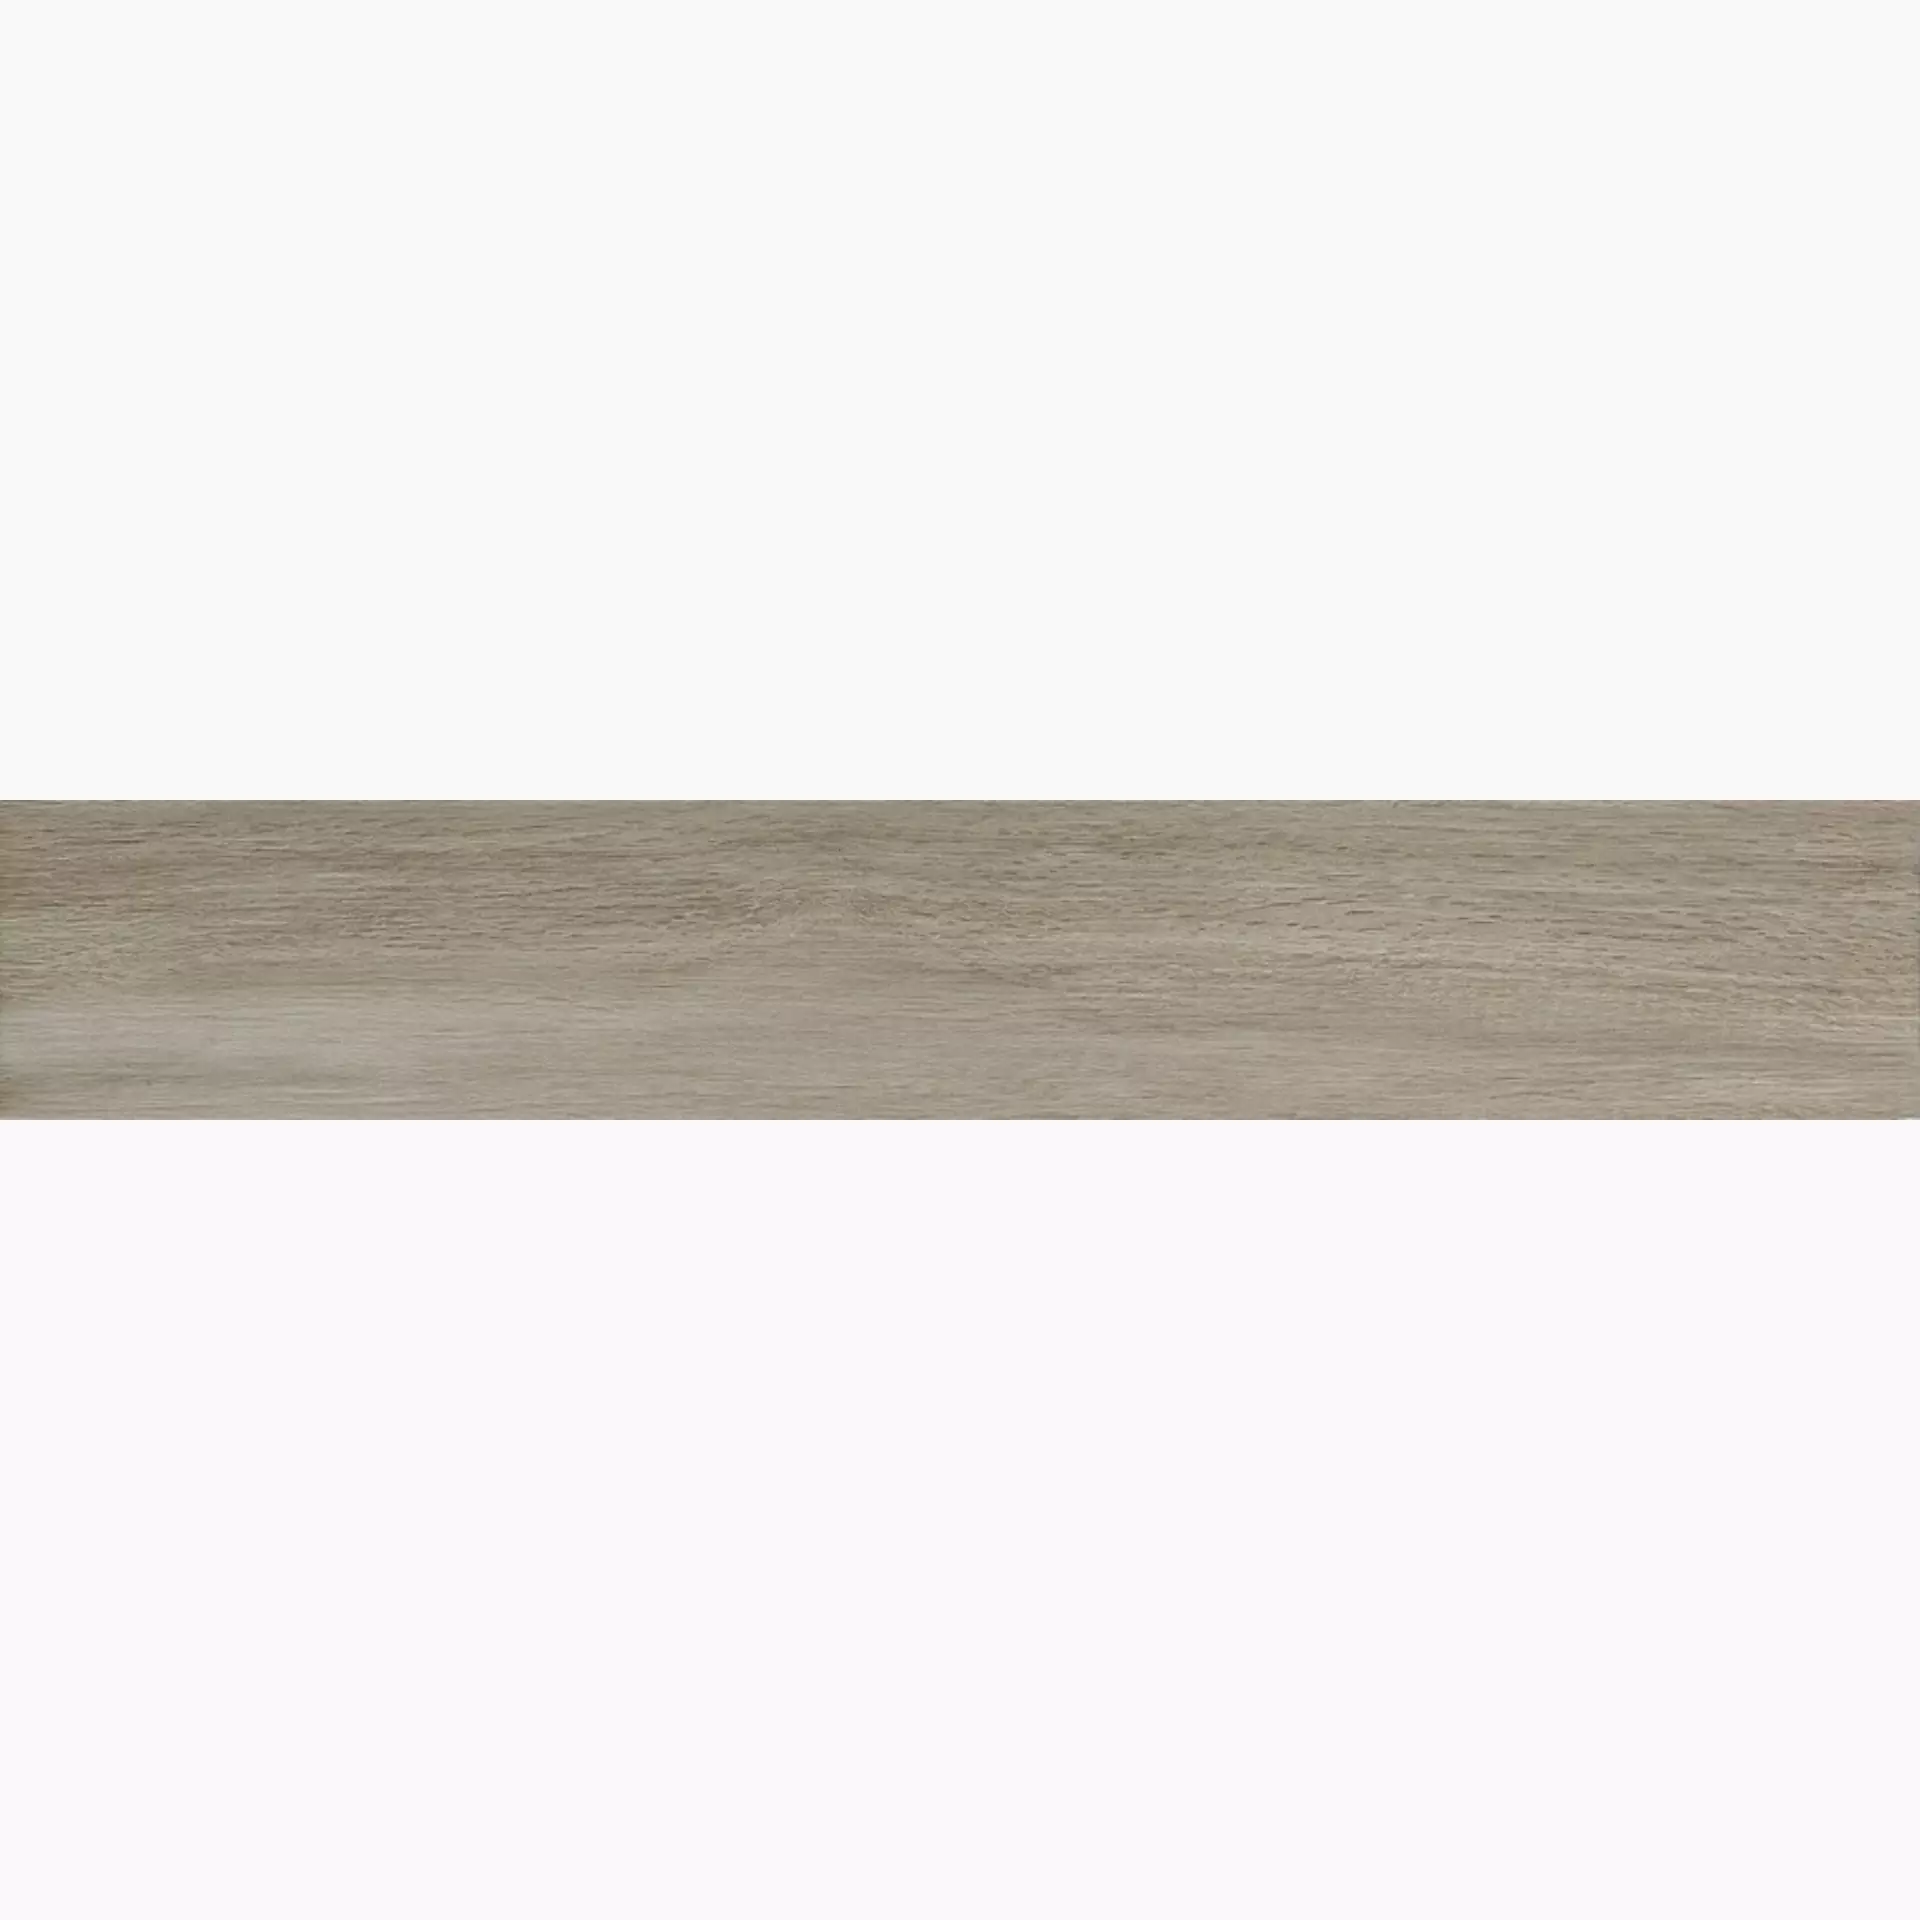 Iris E-Wood Grey Naturale 894012 15x90cm 9mm